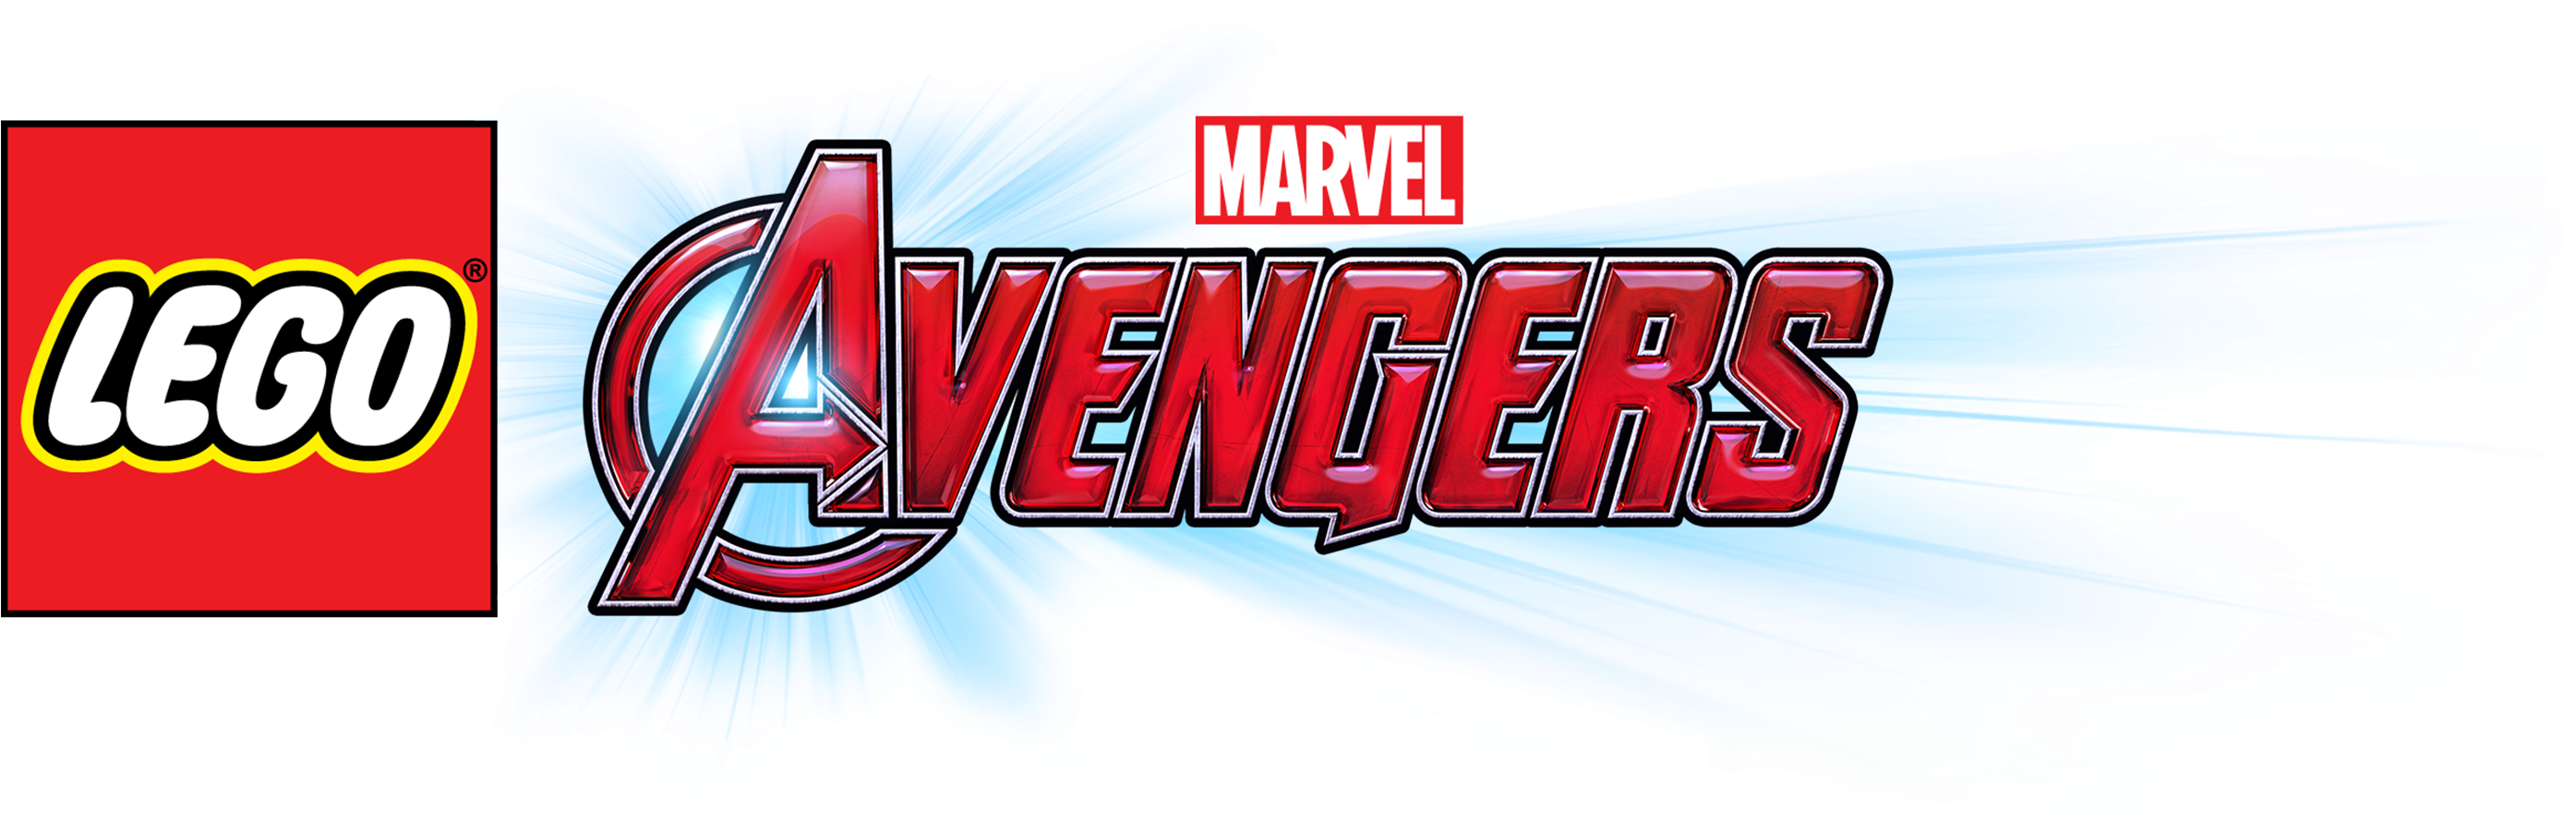 Logo Avengers Download Free Image PNG Image